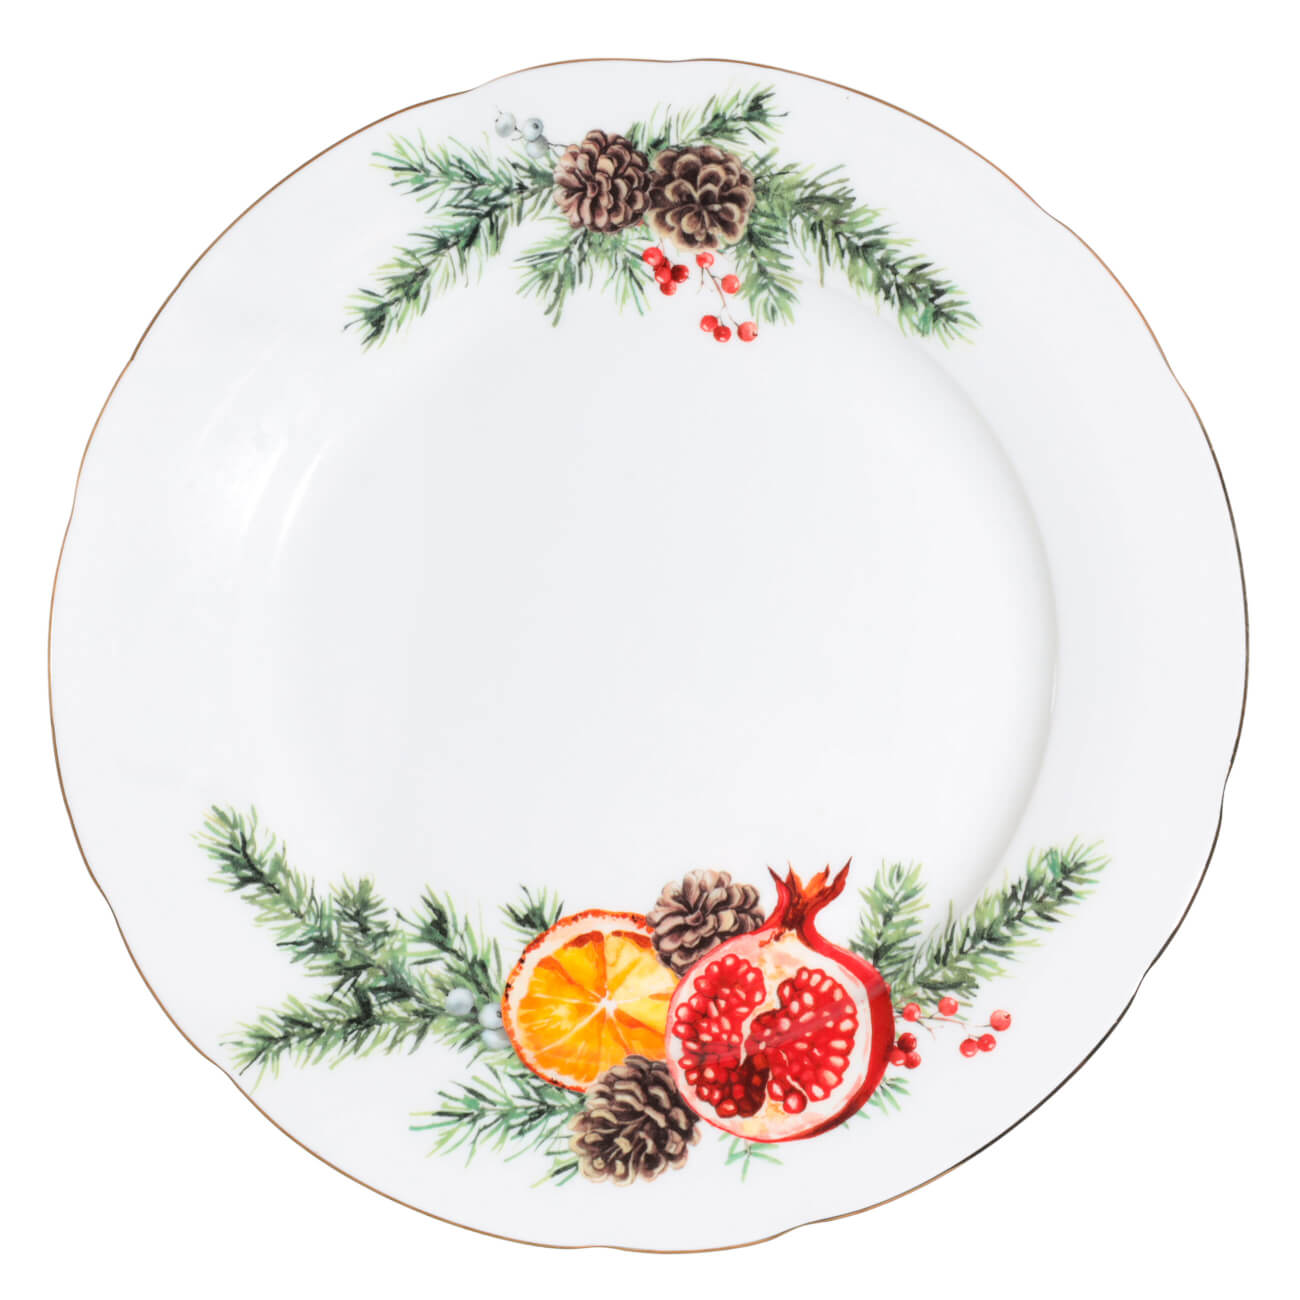 Тарелка обеденная, 27 см, фарфор F, Апельсин и гранат, Christmas miracle чурчхела полезнотека 90 г гранат с грецким орехом